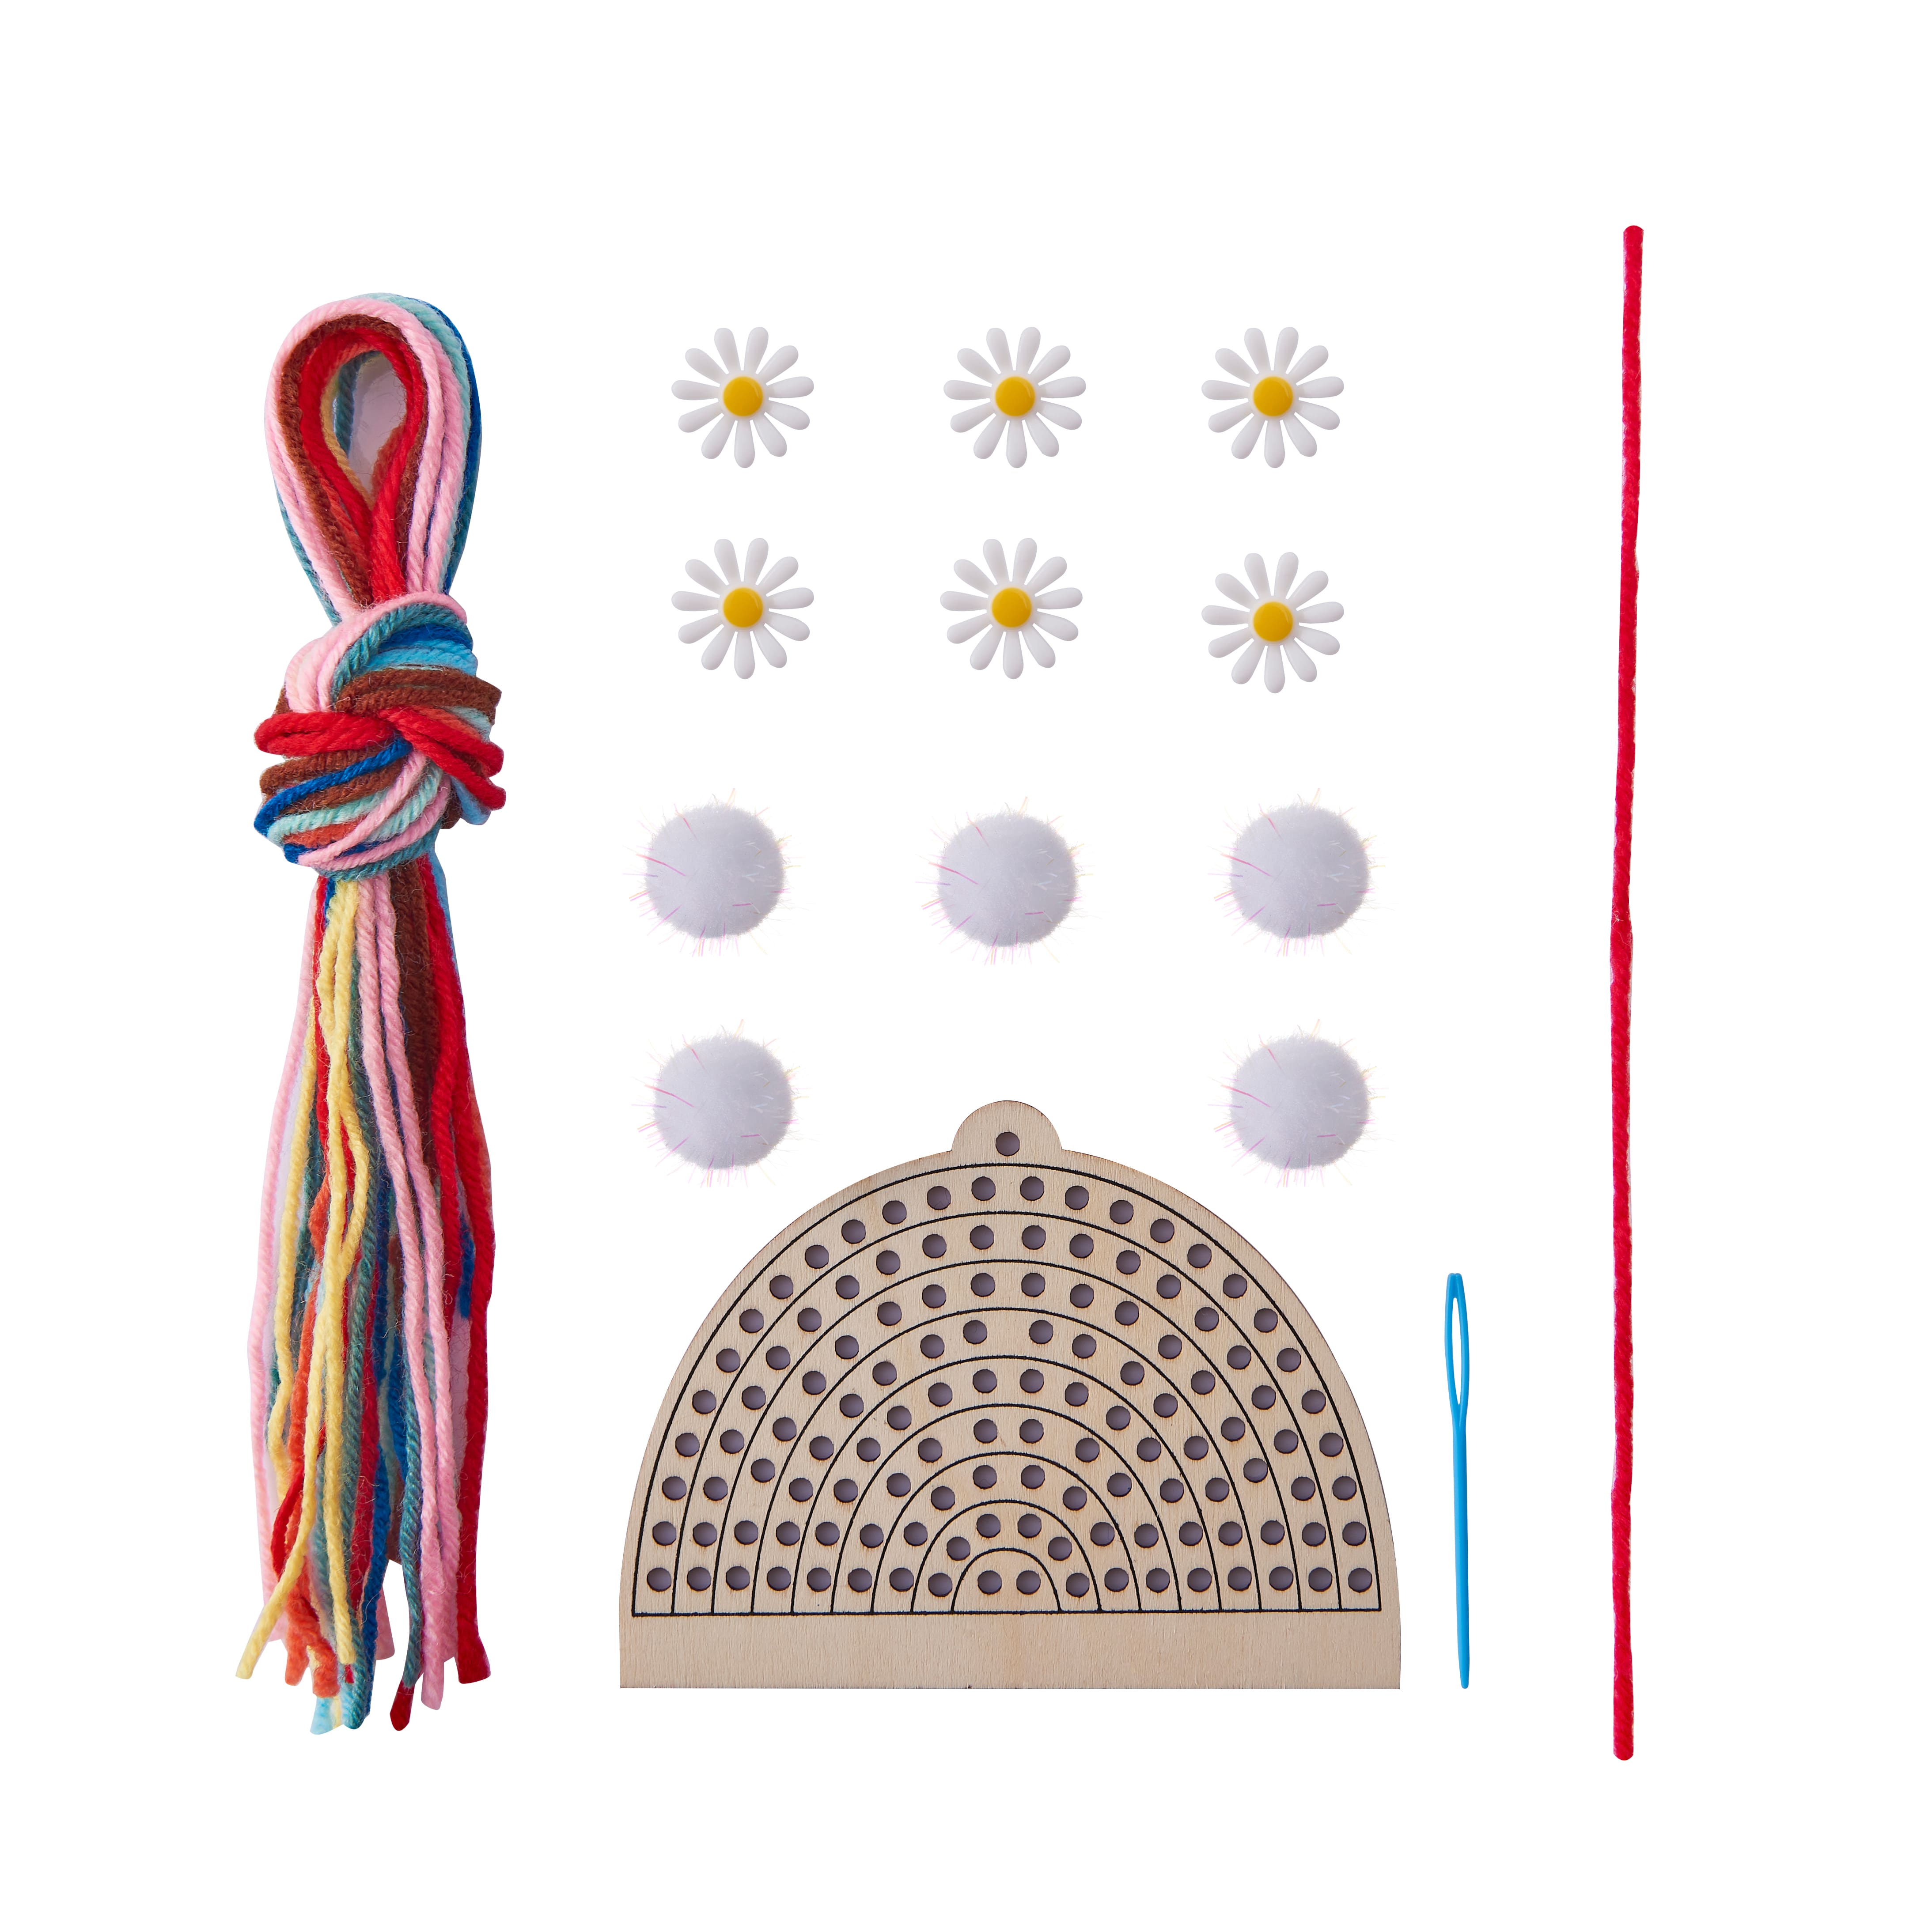 Summer Rainbow Weaving Activity Kit by Creatology&#x2122;